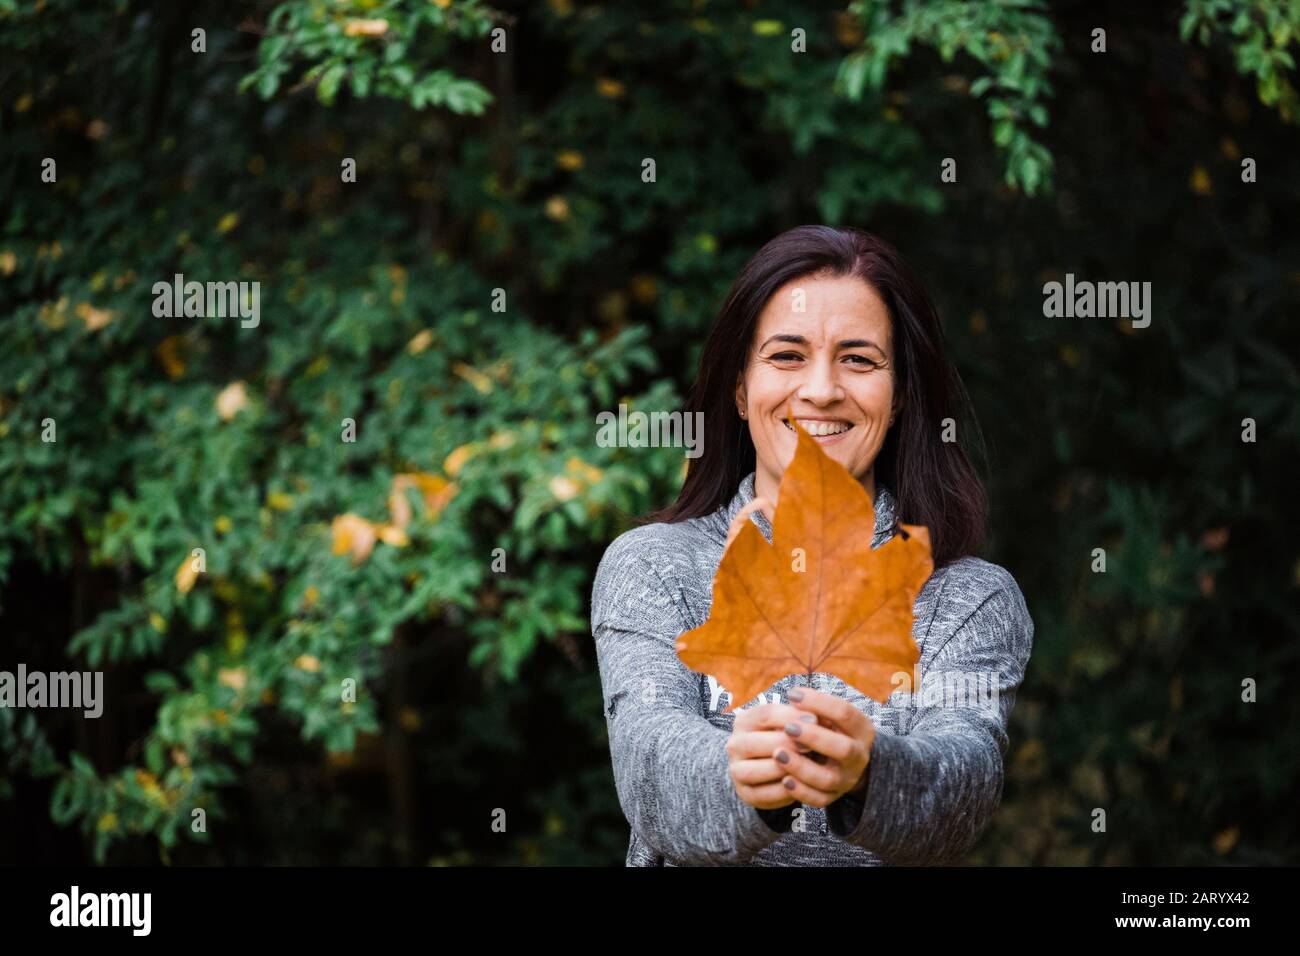 Smiling woman holding autumn leaf Banque D'Images